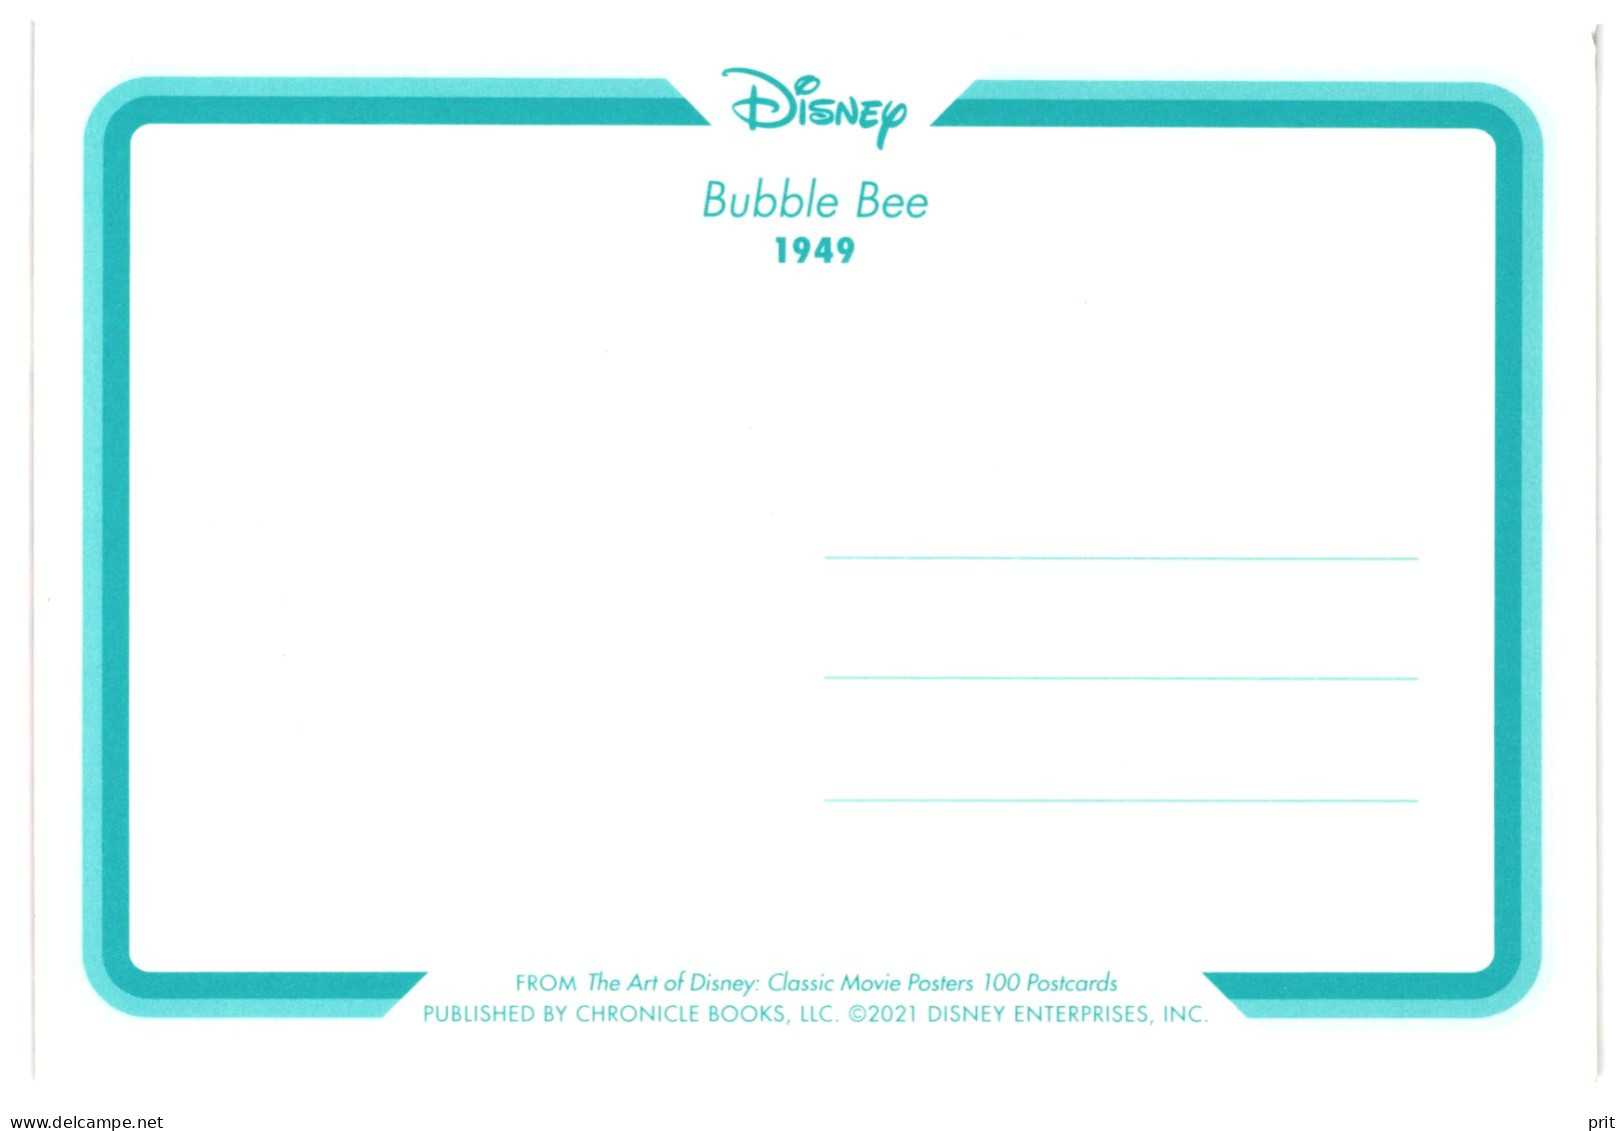 Pluto Bubble Bee Walt Disney 2021 Unused Postcard. Publisher Chronicle Books, Disney Enterprises - Disneyworld